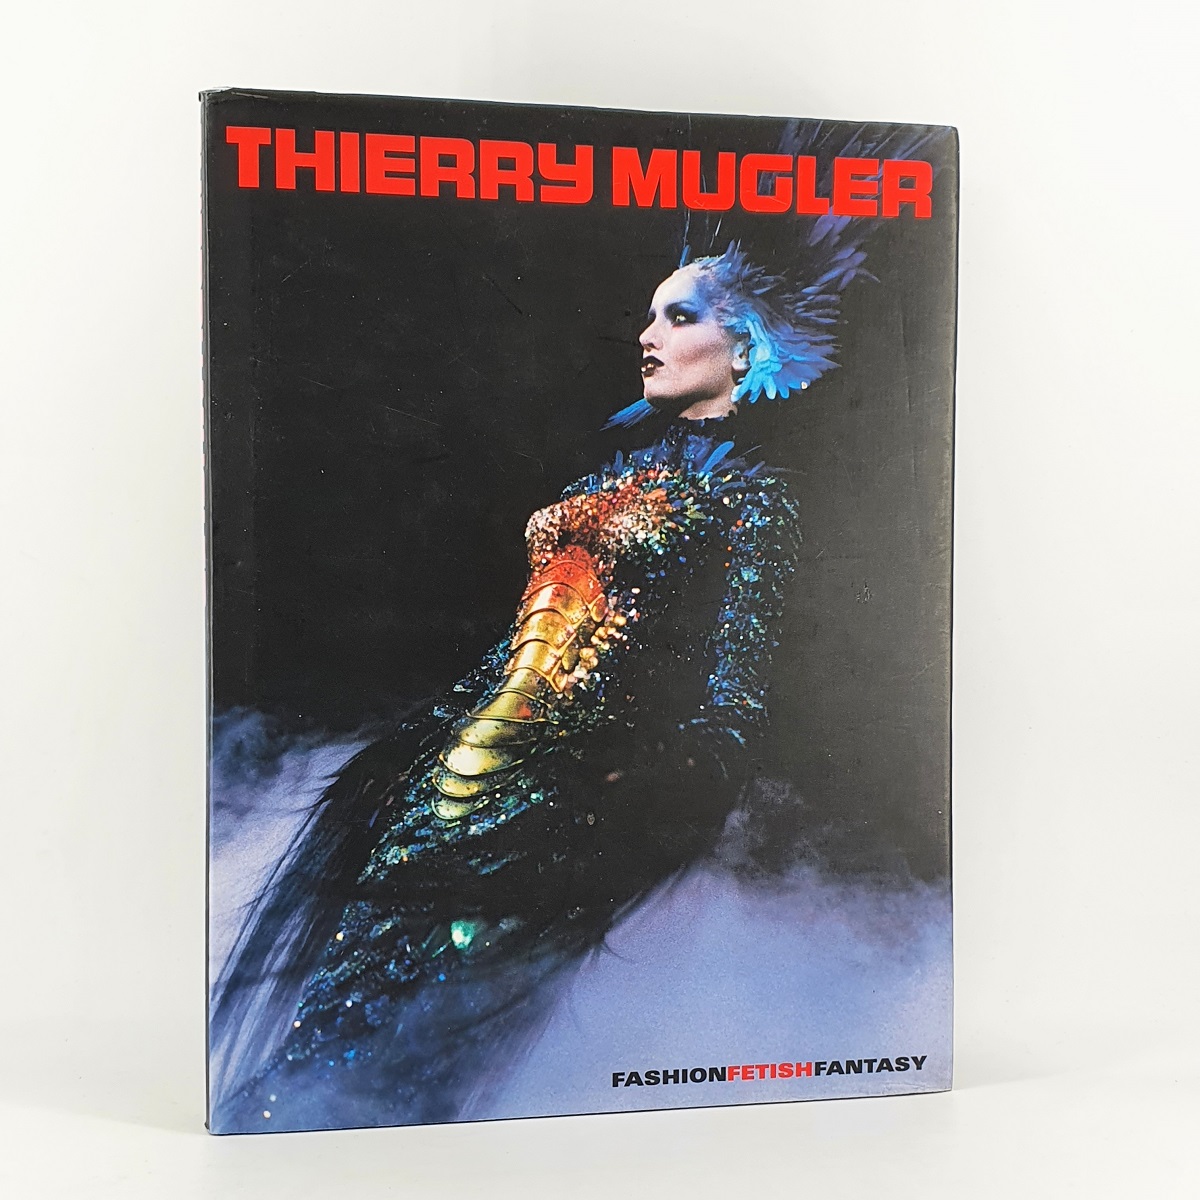 Thierry Mugler. Fashion Fetish Fantasy